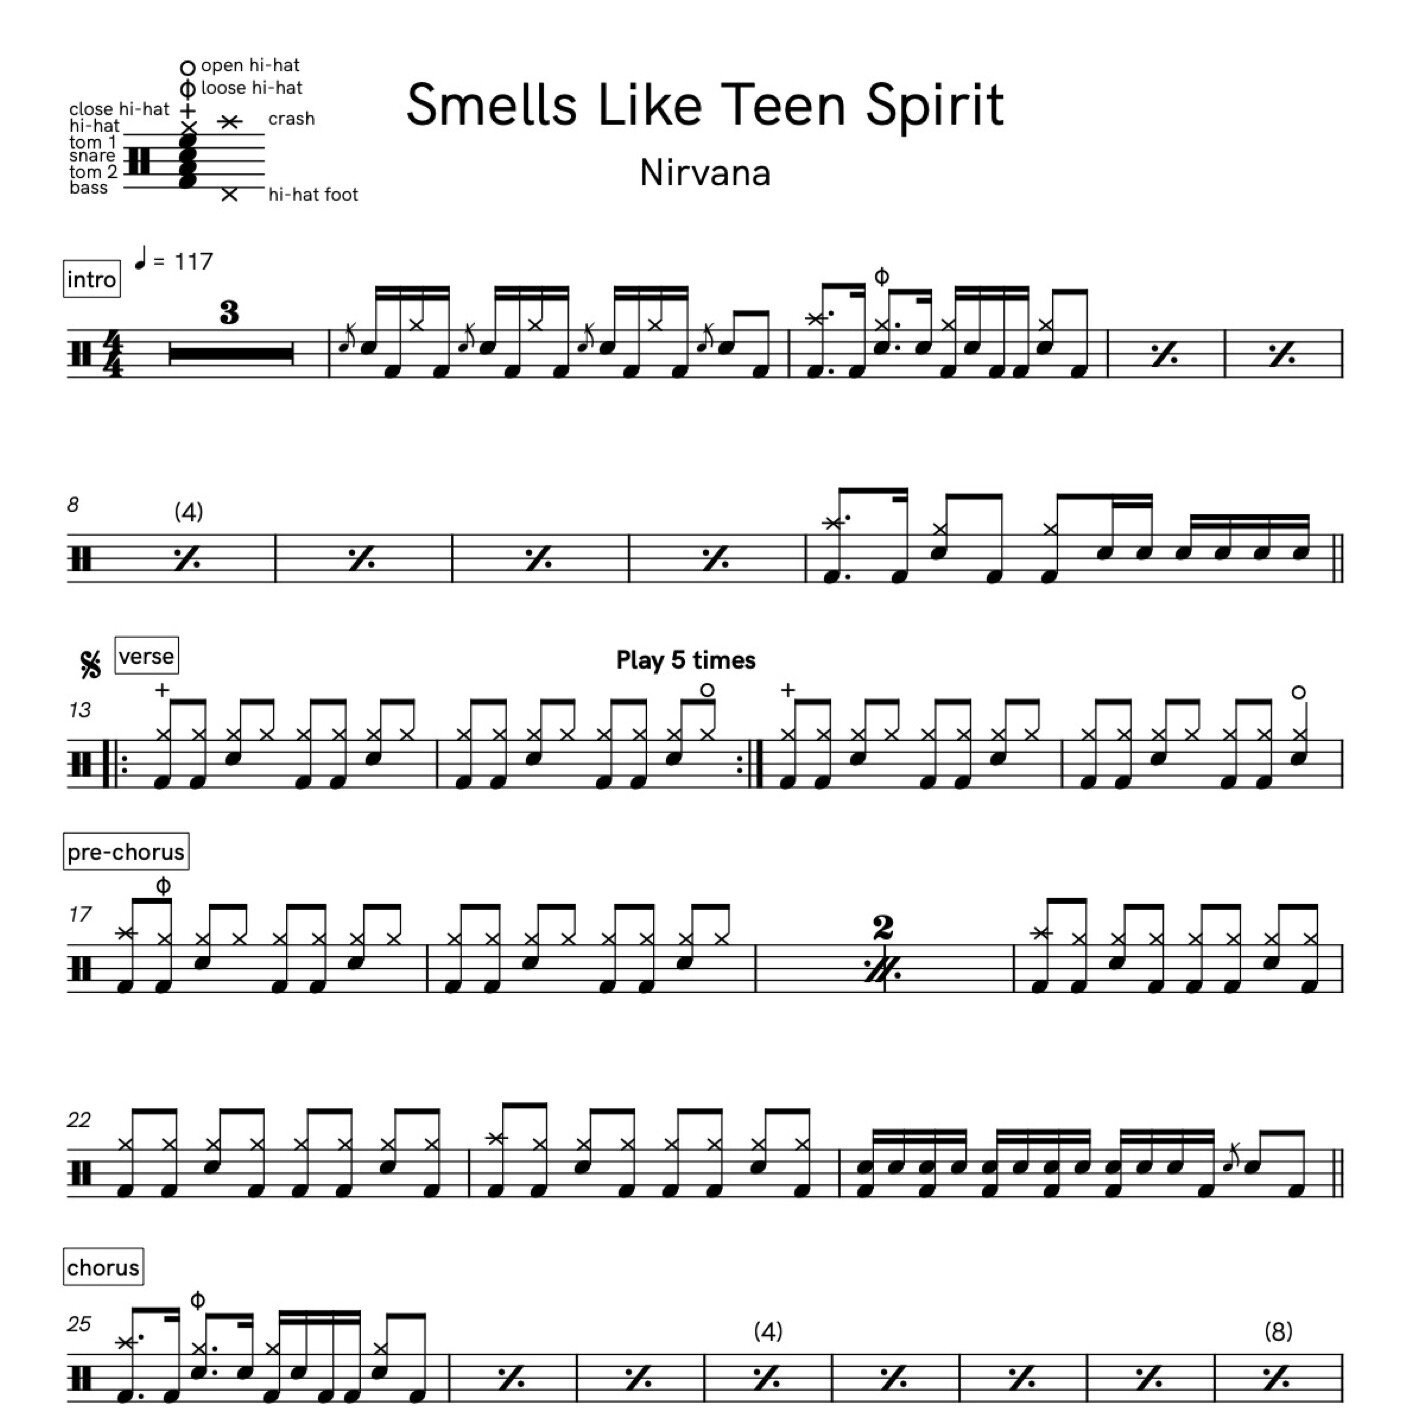 Like teen spirit слушать. Smells like teen Spirit Ноты для барабанов. Smells like teen Spirit Ноты барабаны. Smells like teen Spirit - Nirvana на барабанах Ноты. Nirvana - smells like teen Spirit Drum Ноты.